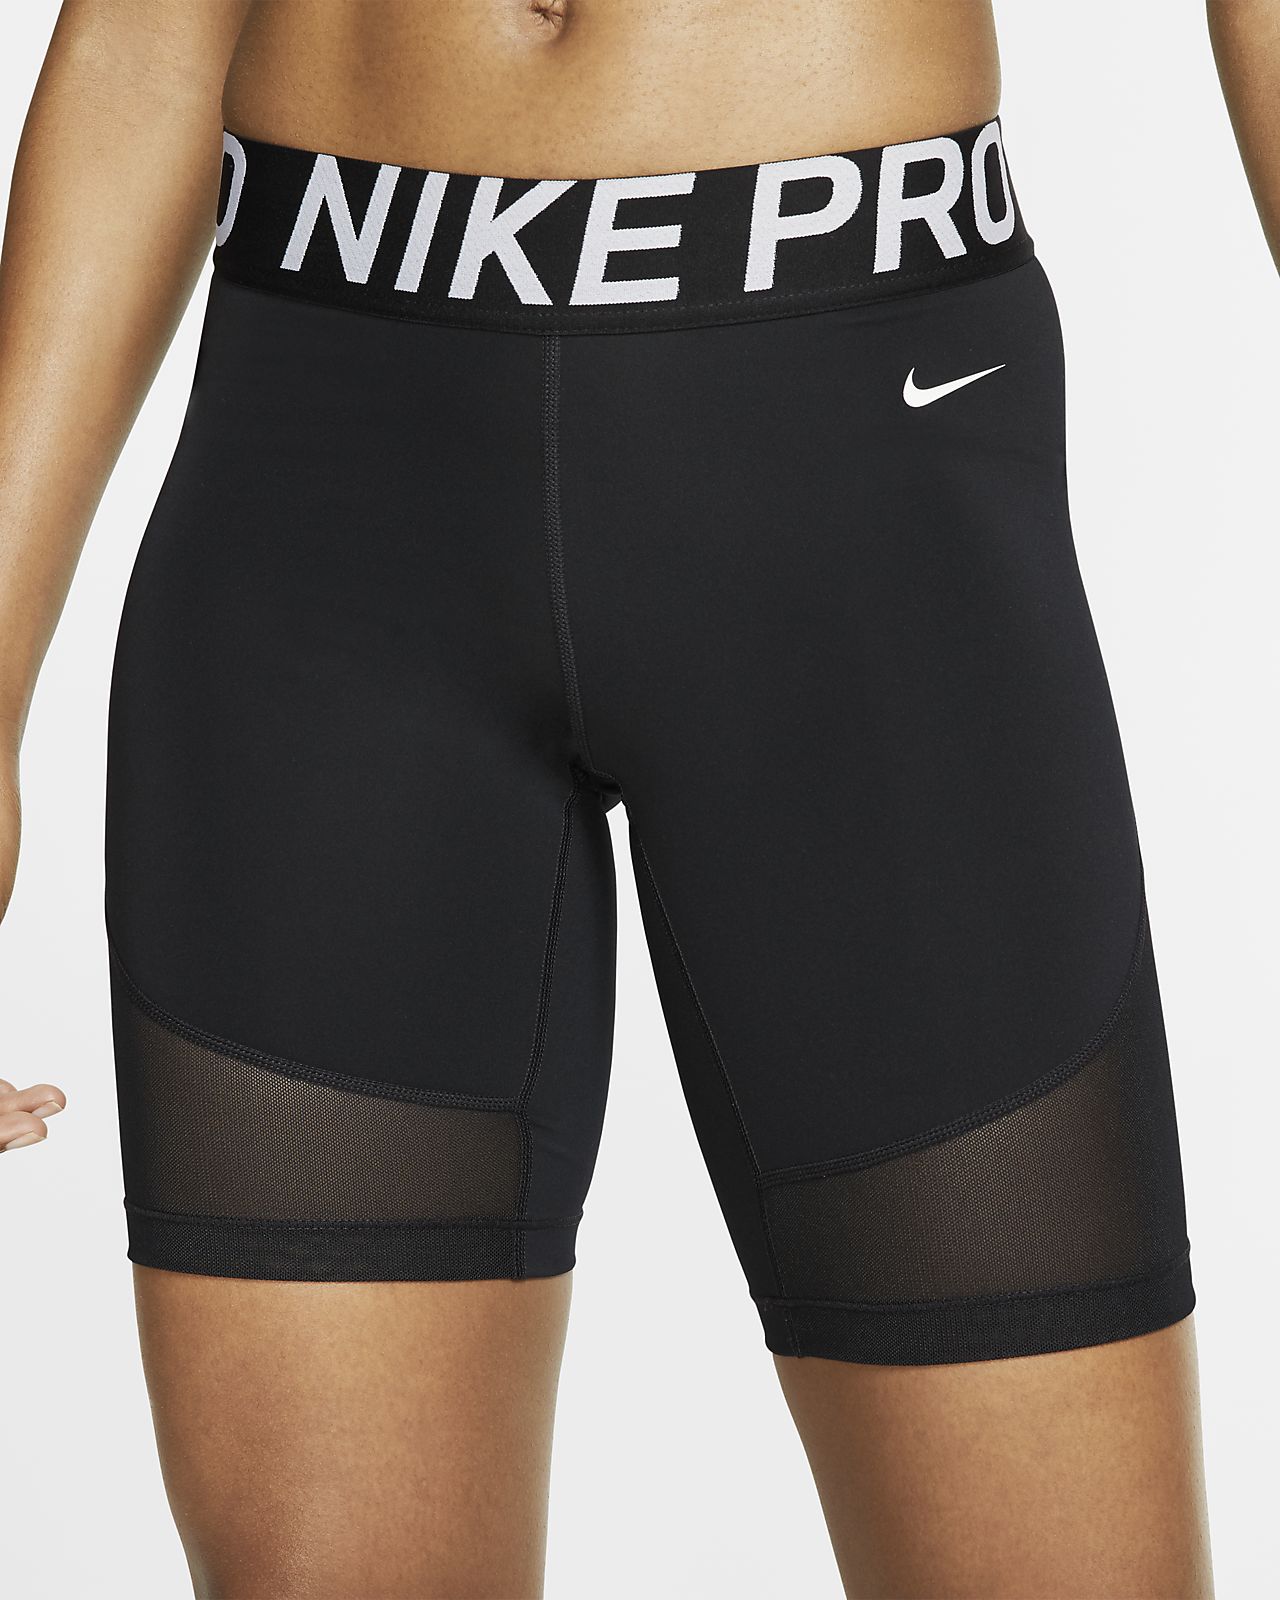 Nike Pro Women S 8 Shorts